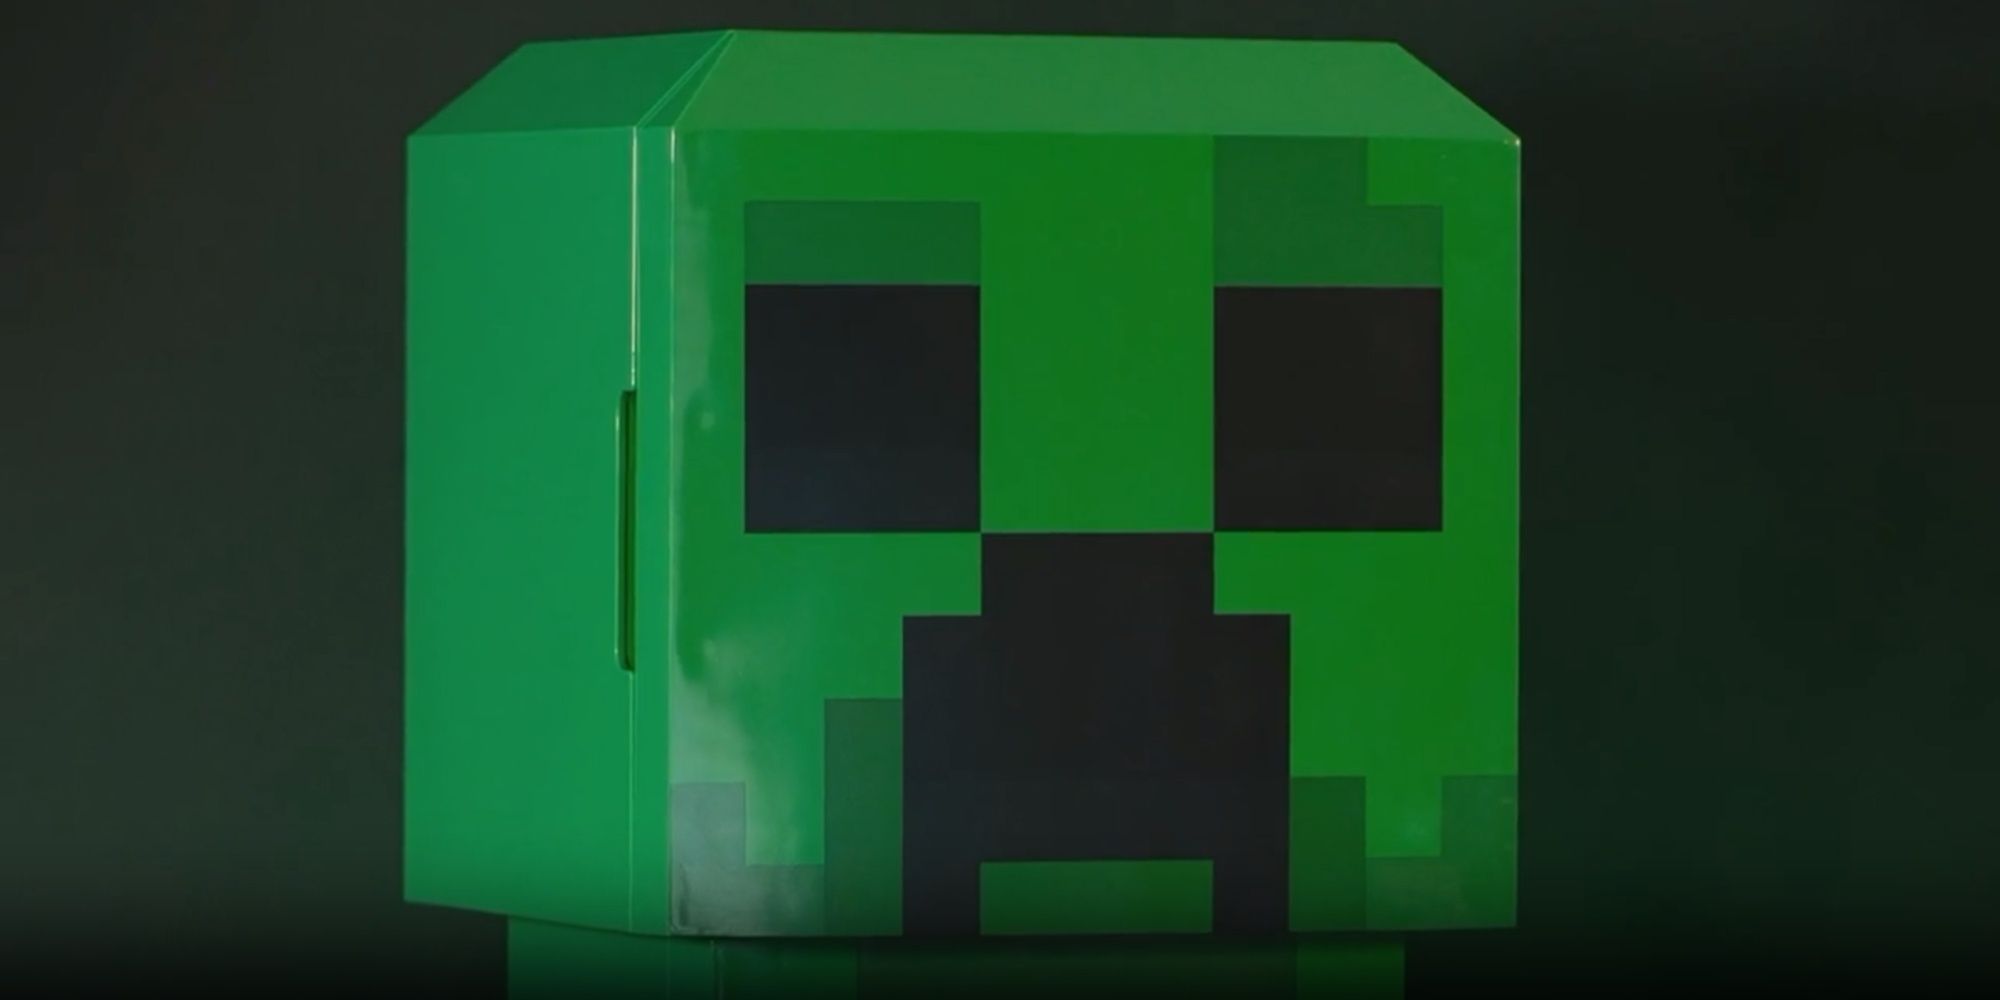 Minecraft's Green Creeper Mini Fridge Is Almost 75 Percent Off For